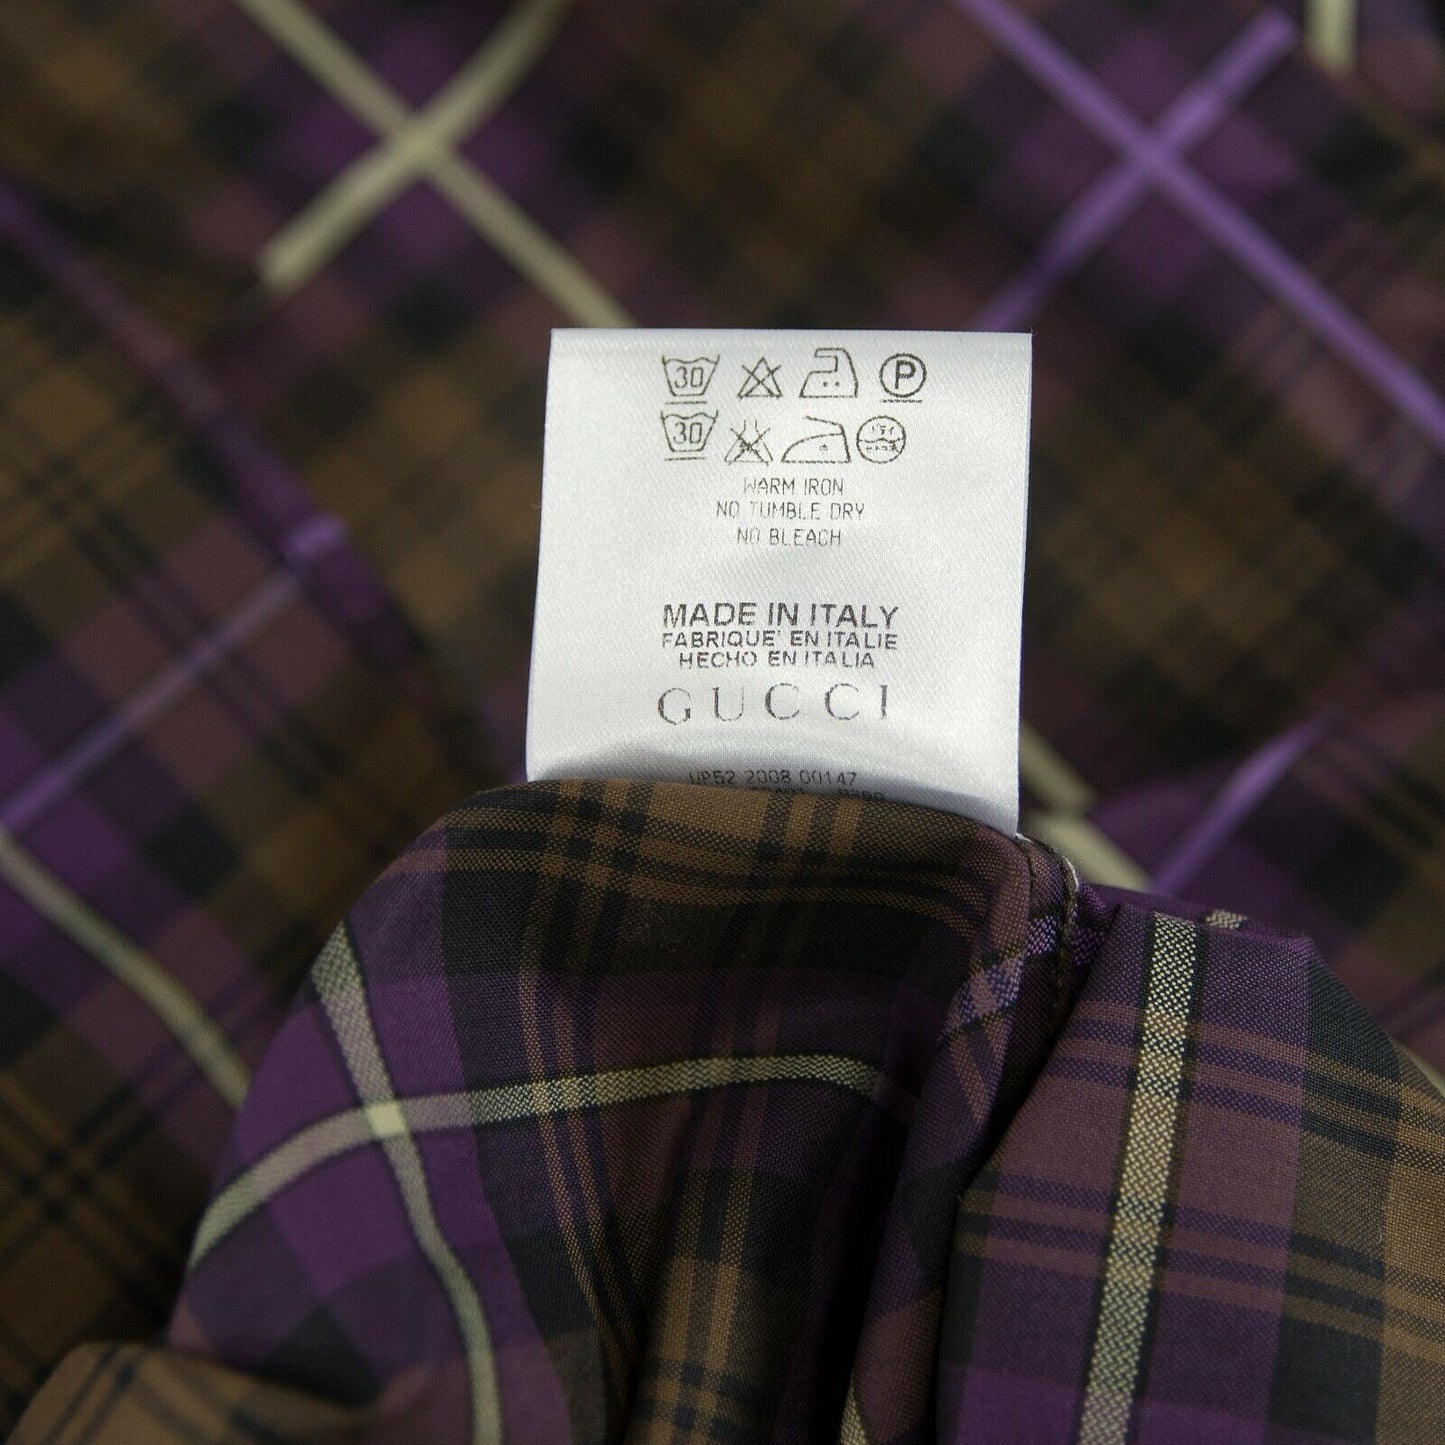 Gucci Purple Plaid Cotton Button Down Dress Work Shirt 44 17.5 NWT